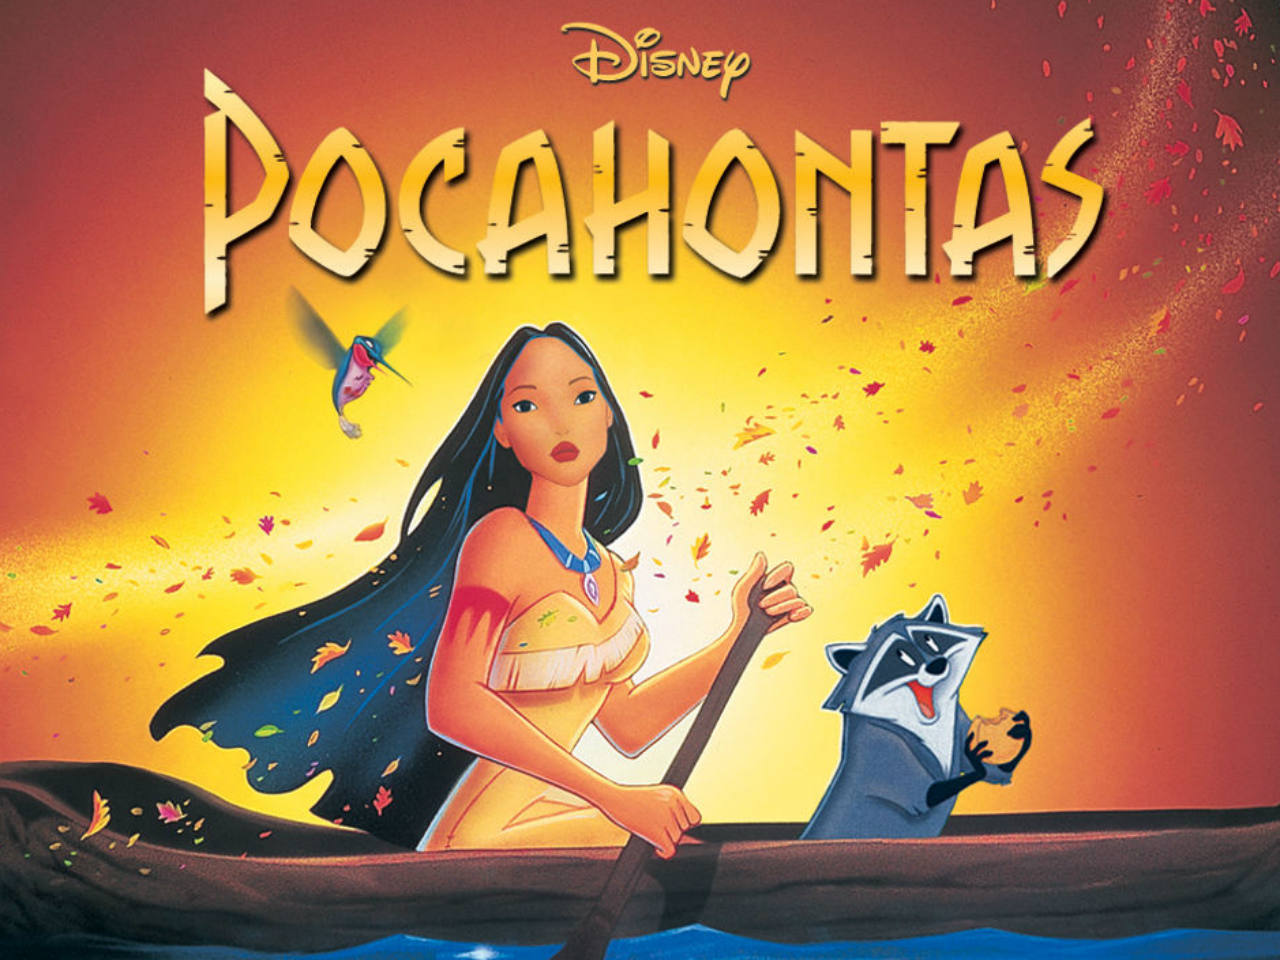 A movie poster of the kids' movie Pocahontas